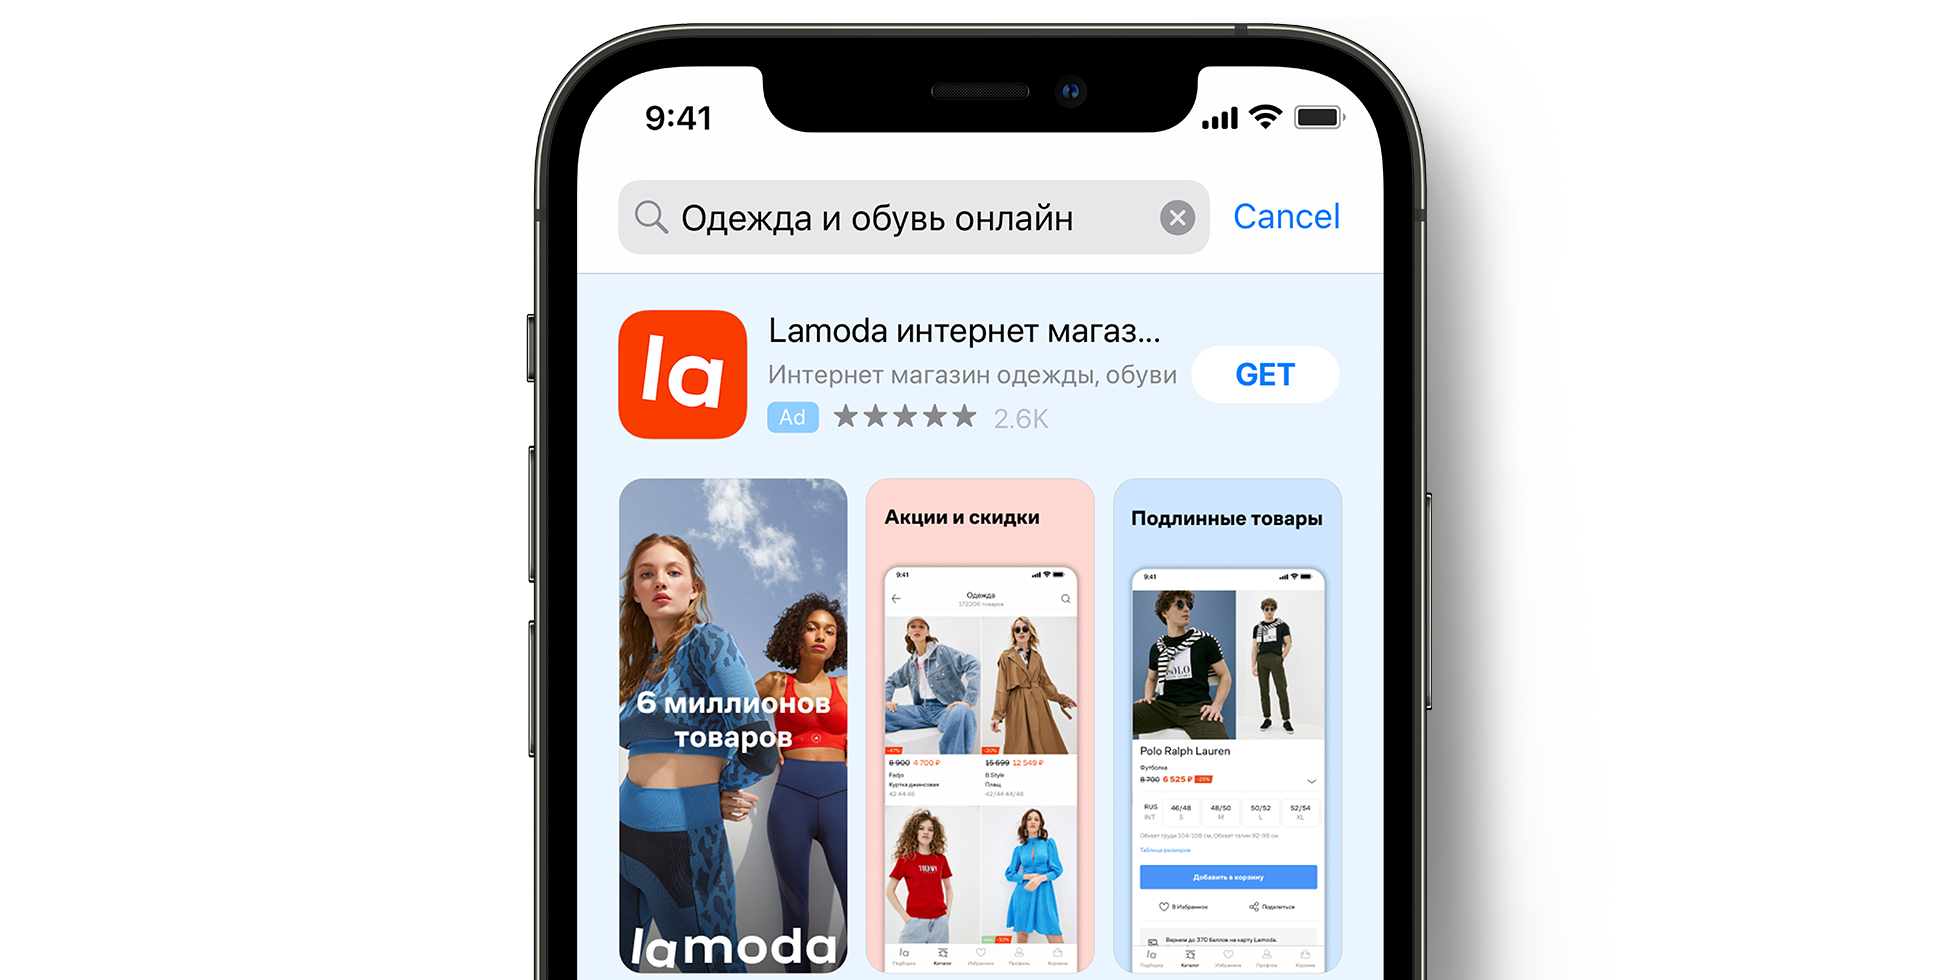 Lamoda-Anzeige im App Store